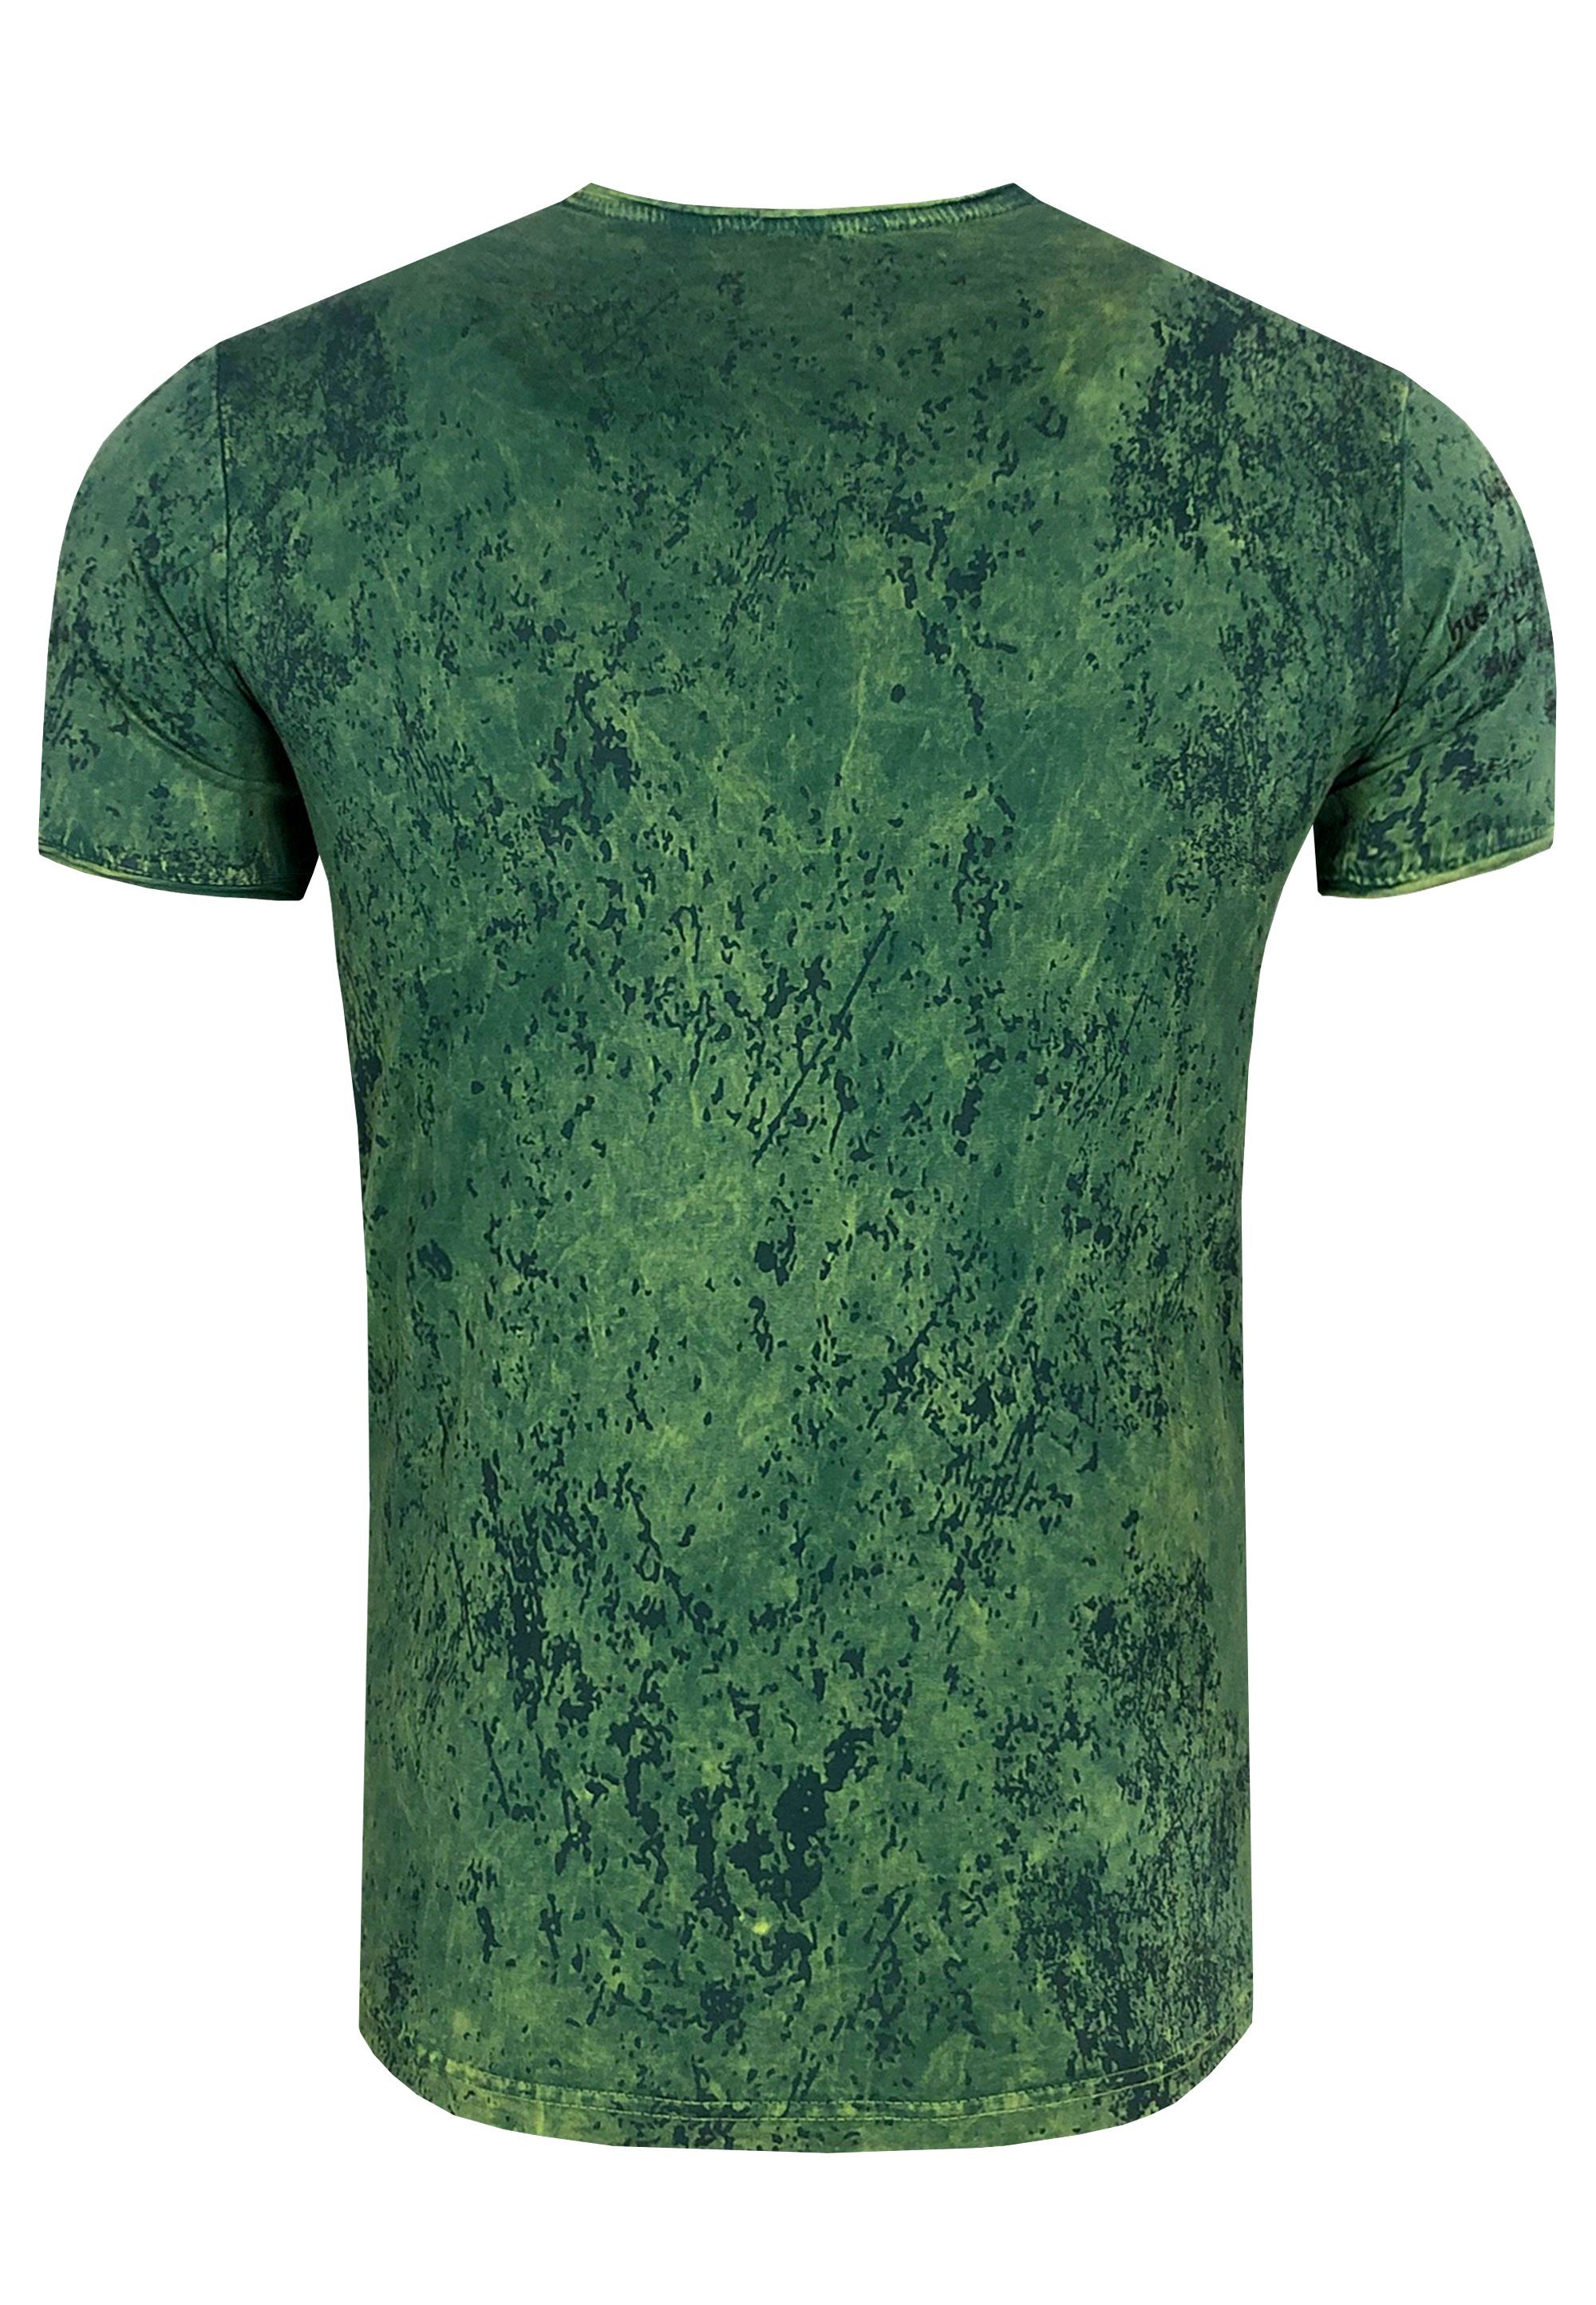 Rusty Neal T-Shirt tollen im Vintage-Look dunkelgrün